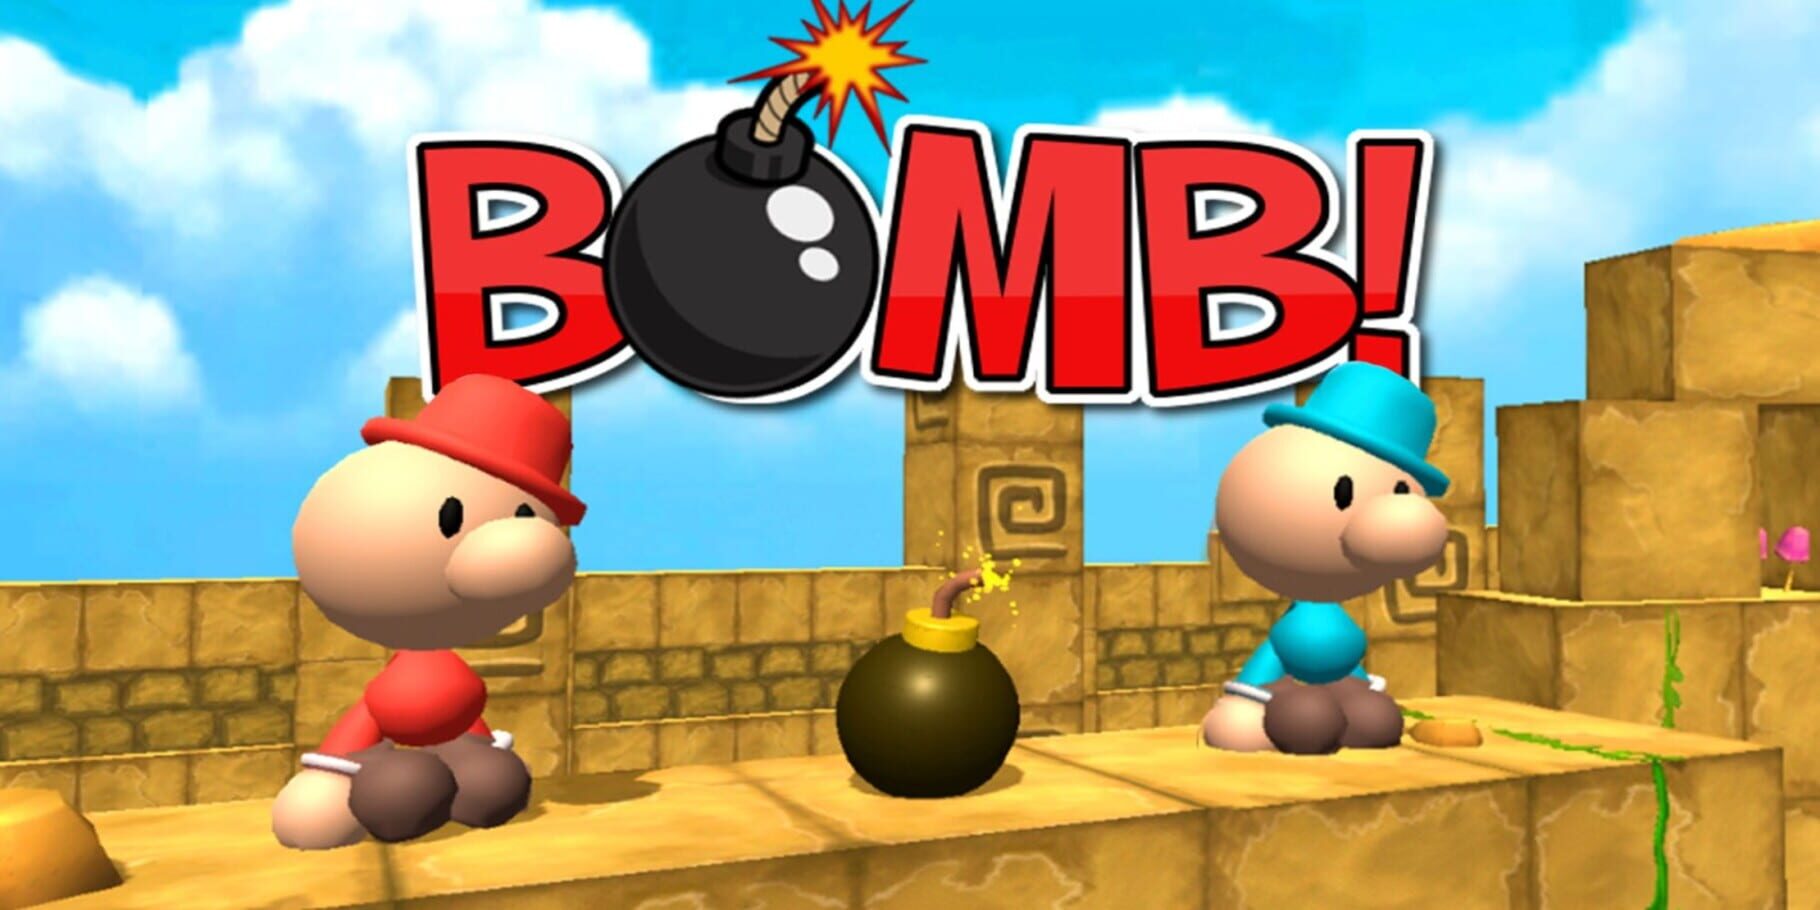 Bomb artwork